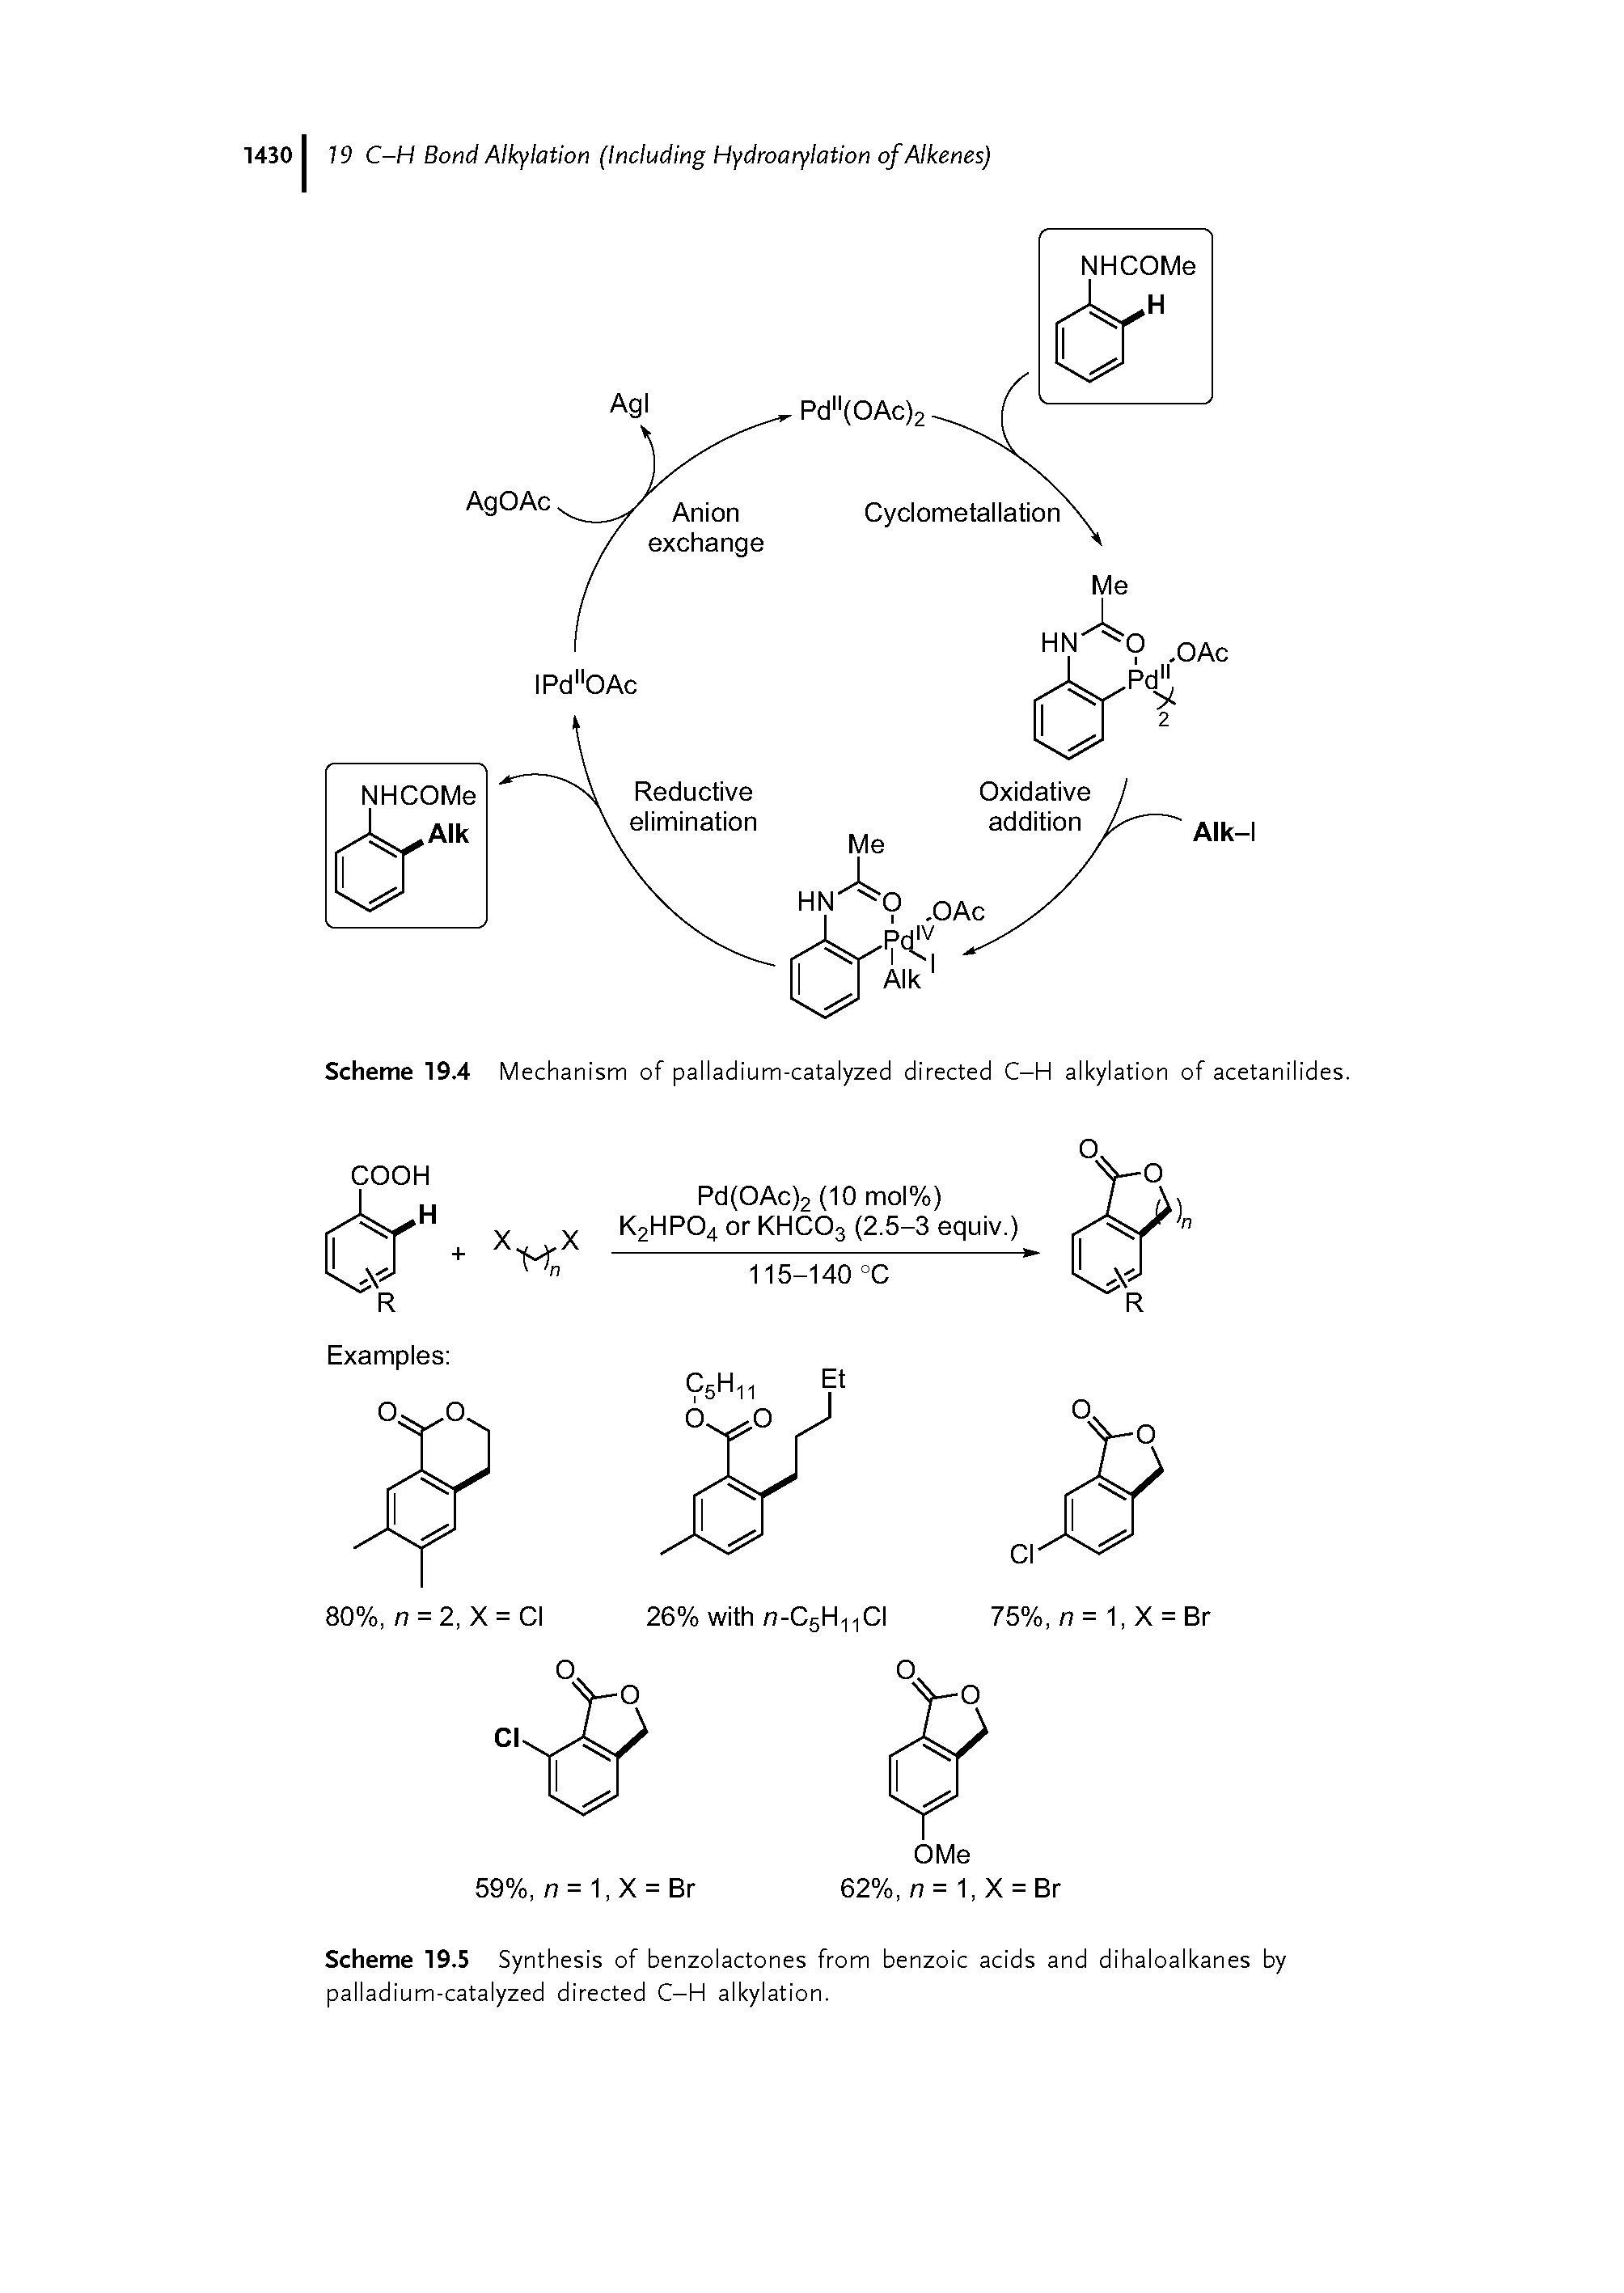 Scheme 19.4 Mechanism of palladium-catalyzed directed C-H alkylation of acetanilides.